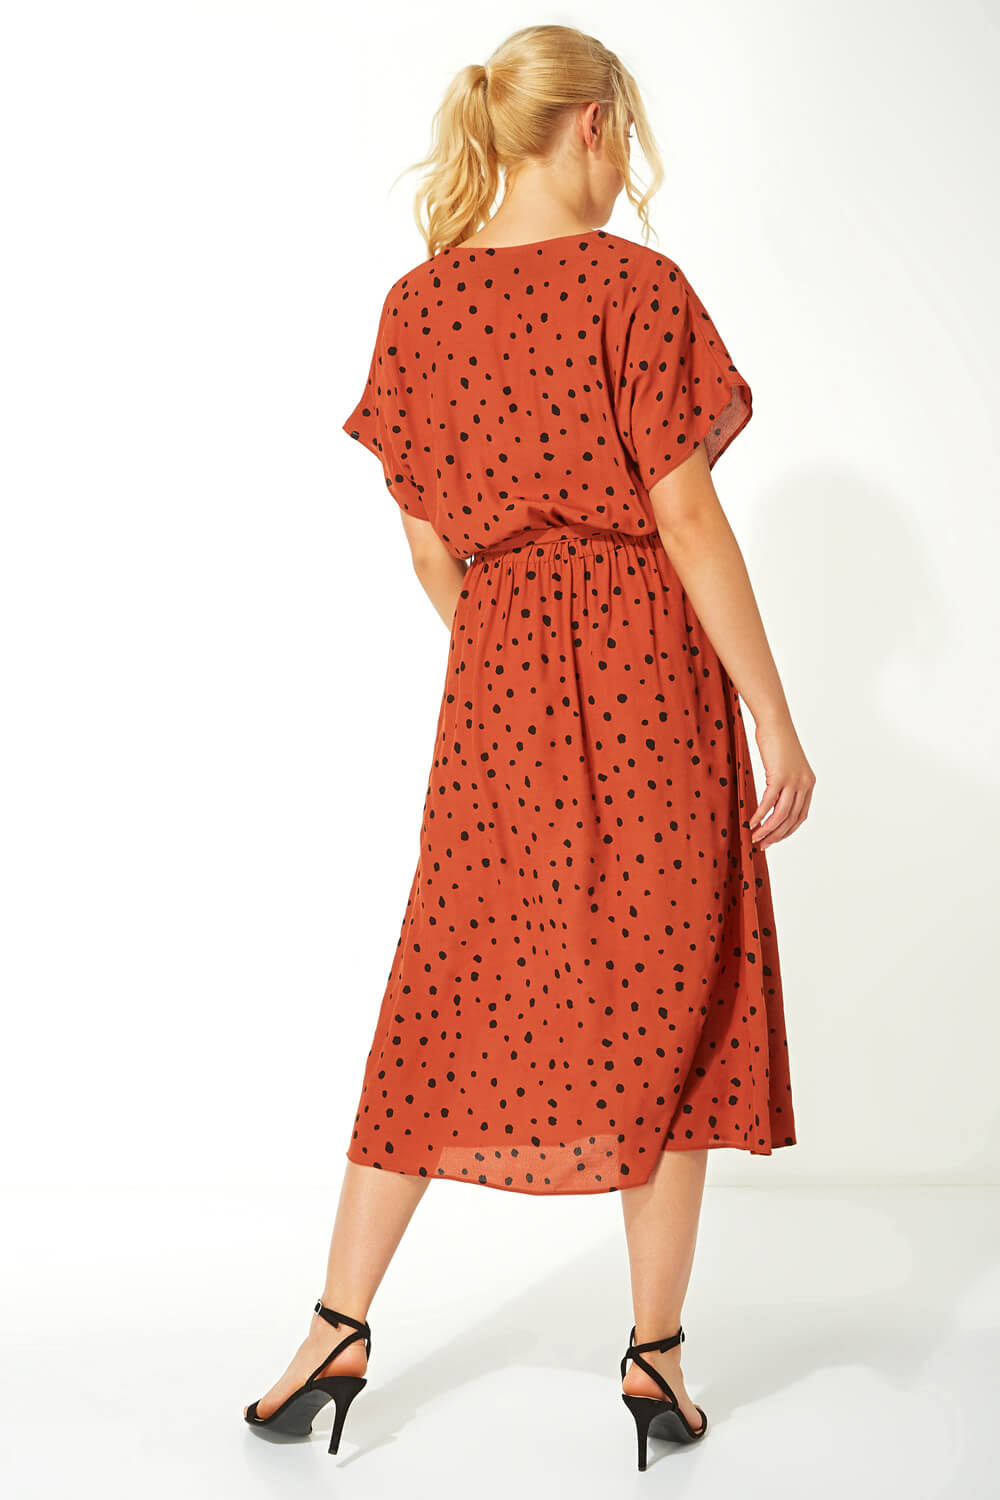 Rust Polka Dot Midi Tea Dress, Image 2 of 5